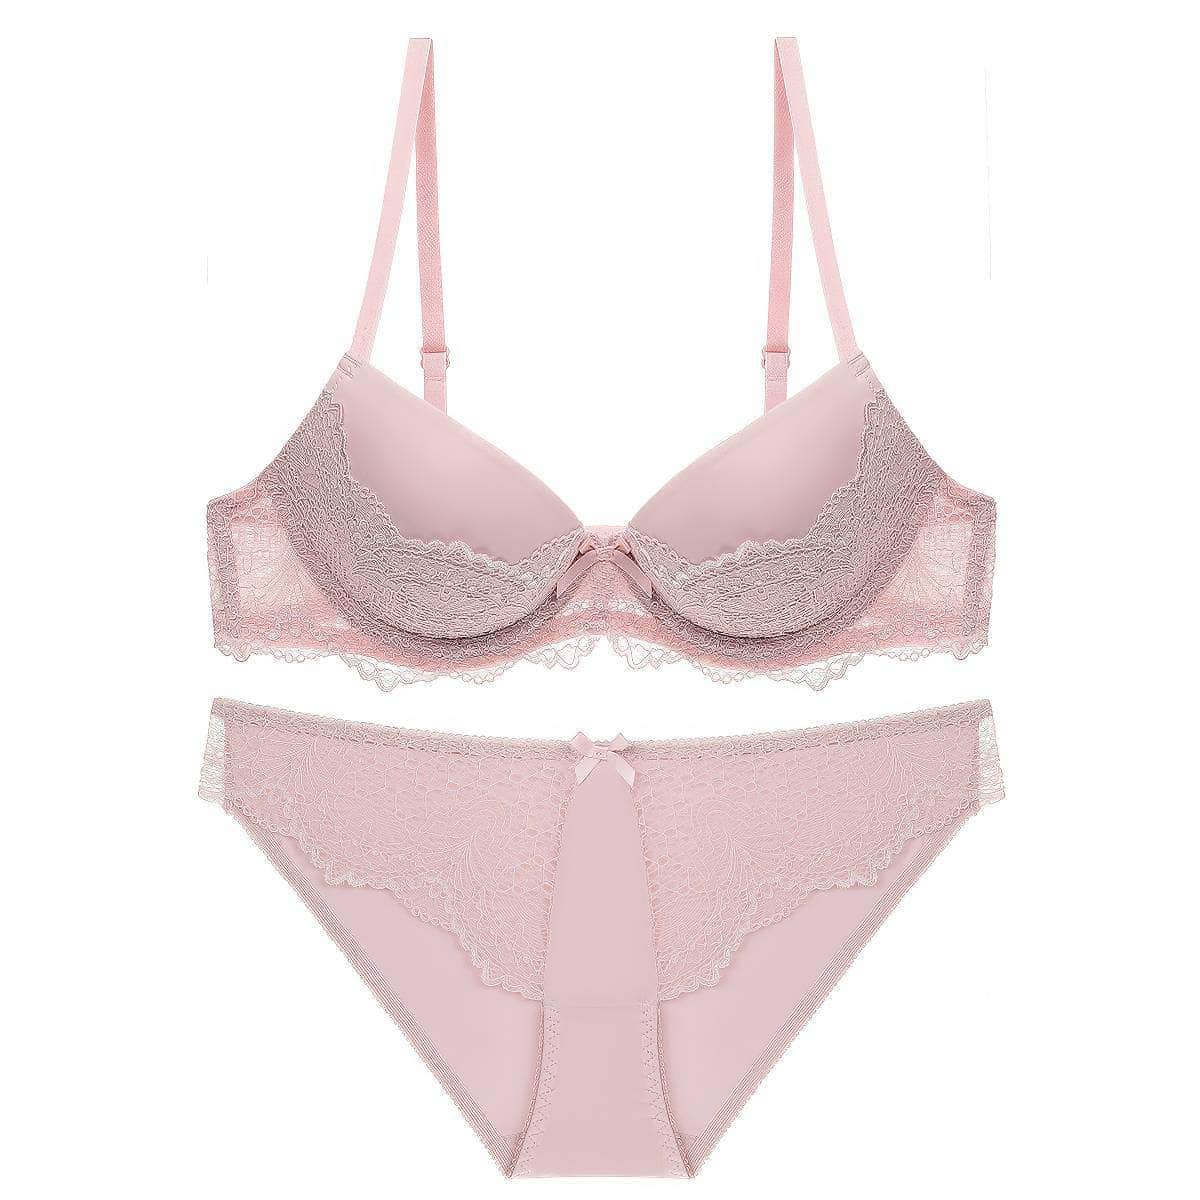 Balconette Floral Lace Detailed Bra Panty Set 70A / Pink